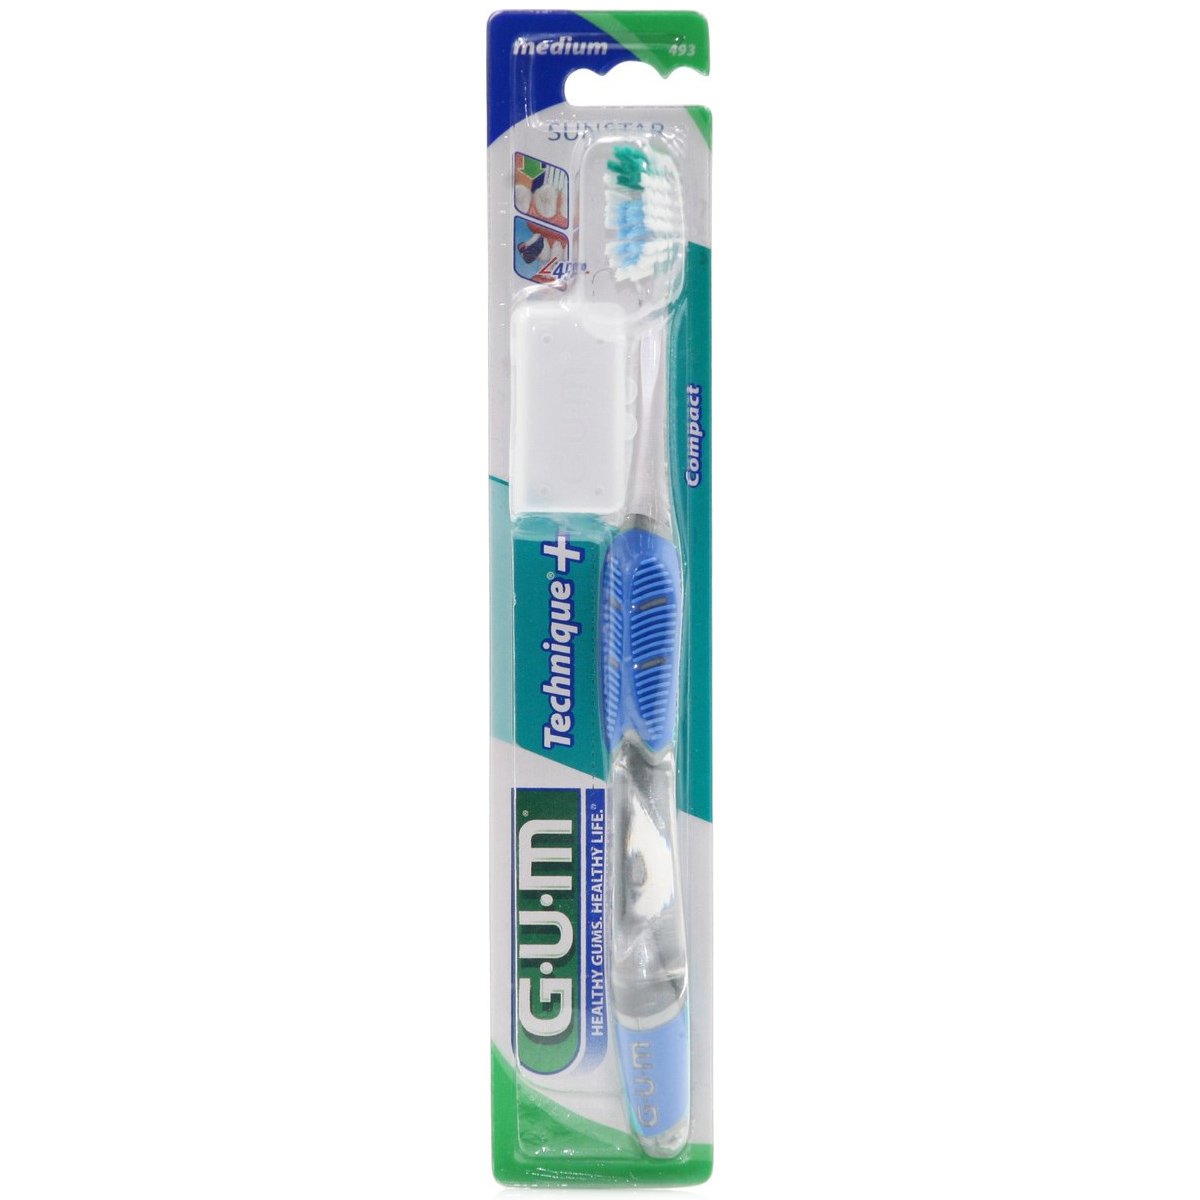 Gum Technique+ Compact Medium Toothbrush Χειροκίνητη Οδοντόβουρτσα Μέτρια με Θήκη Προστασίας 1 Τεμάχιο, Κωδ 493 – Μπλε